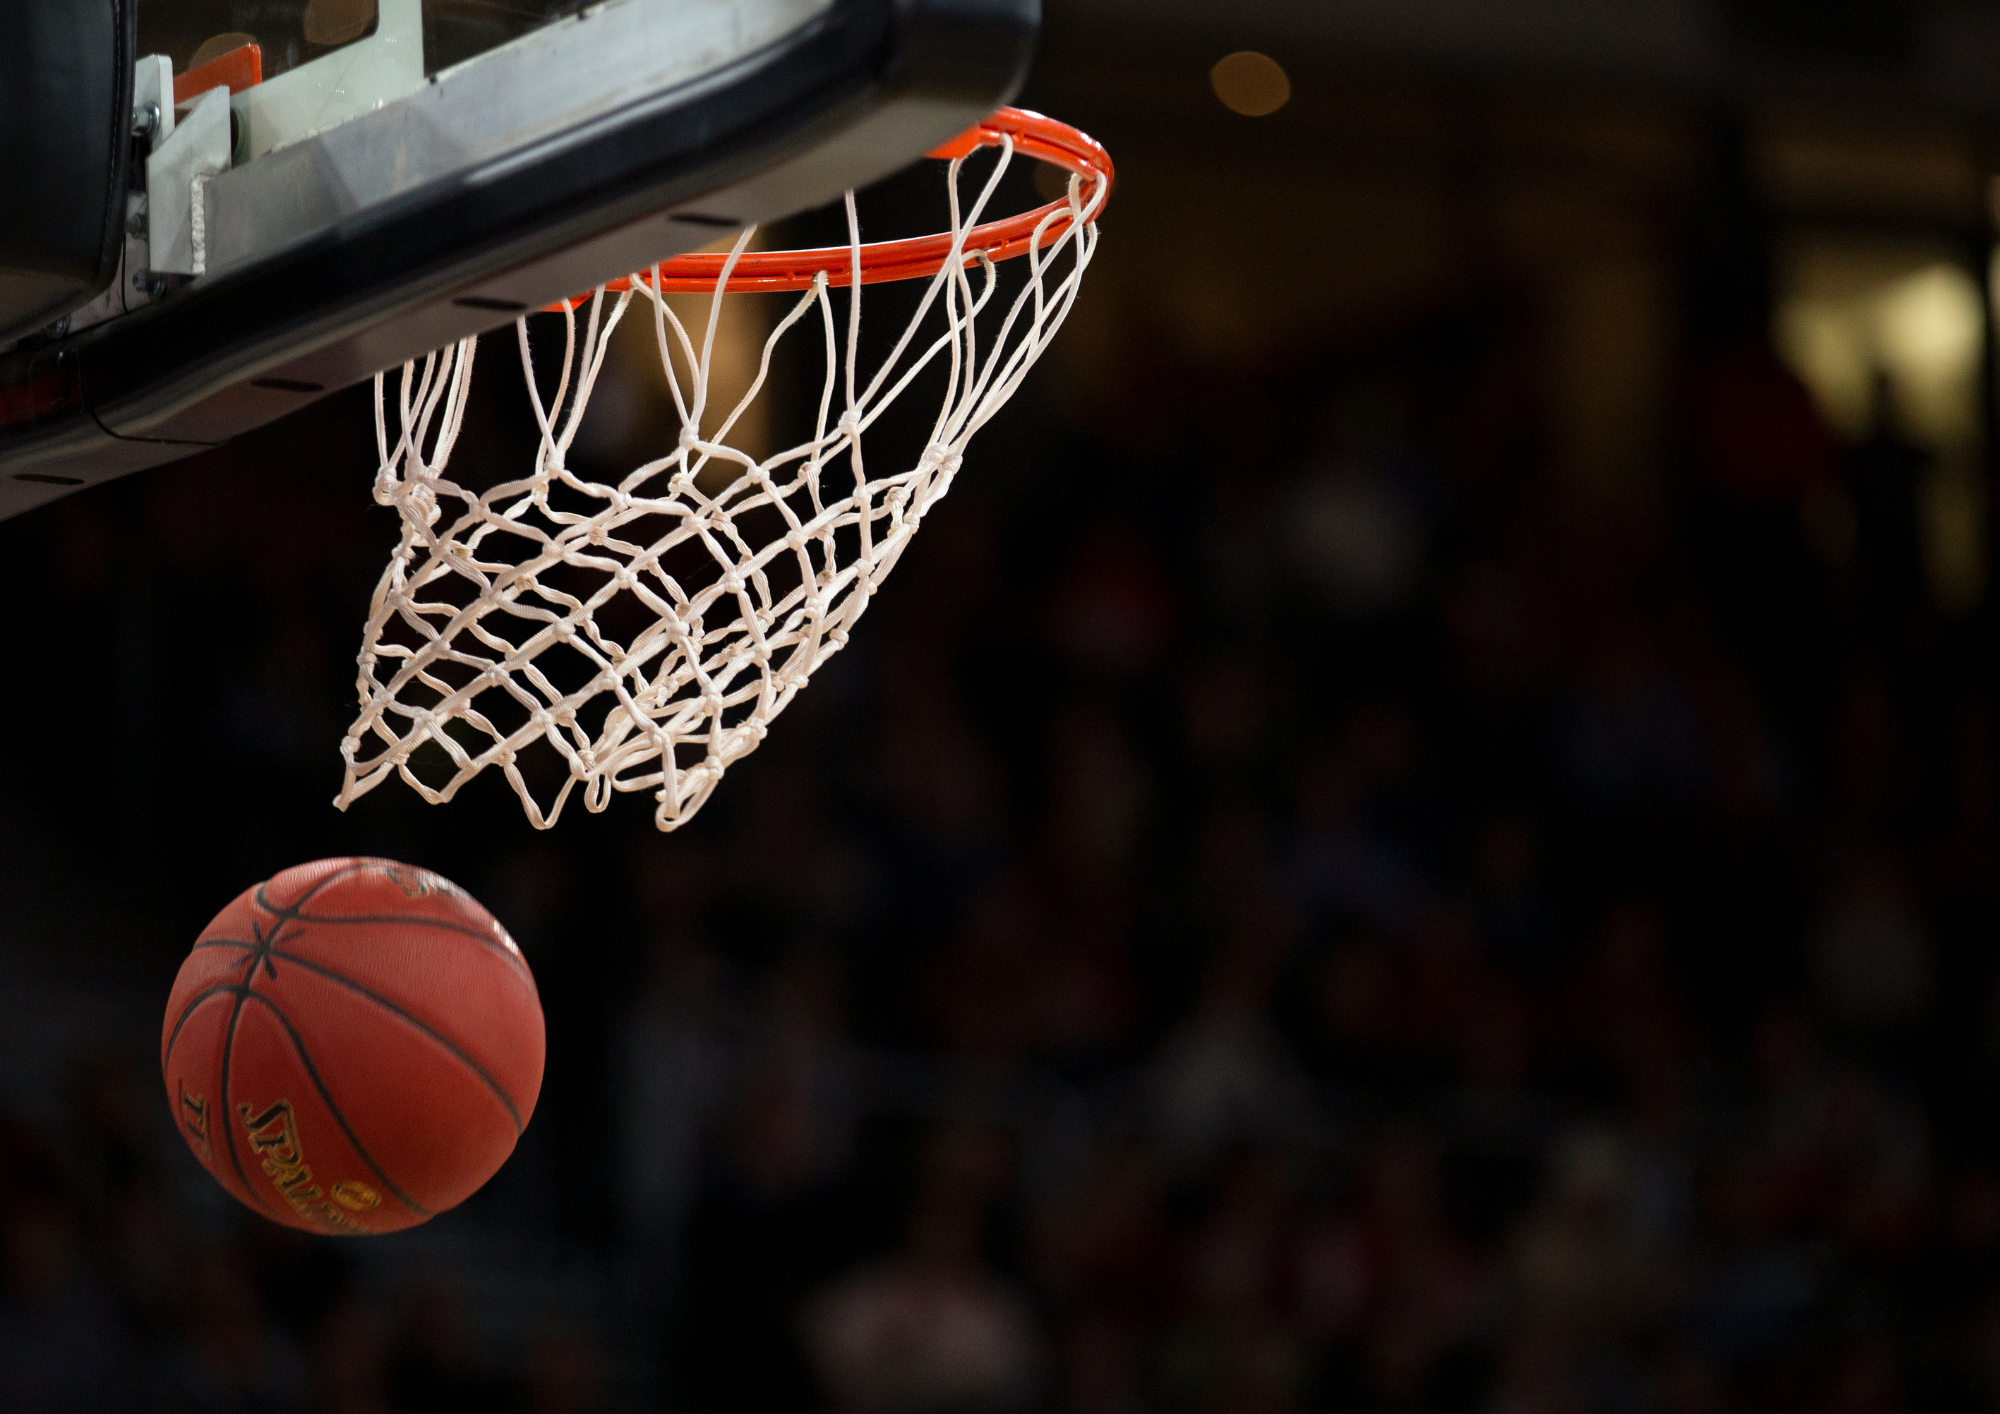 Basketball falling through a basketball net.